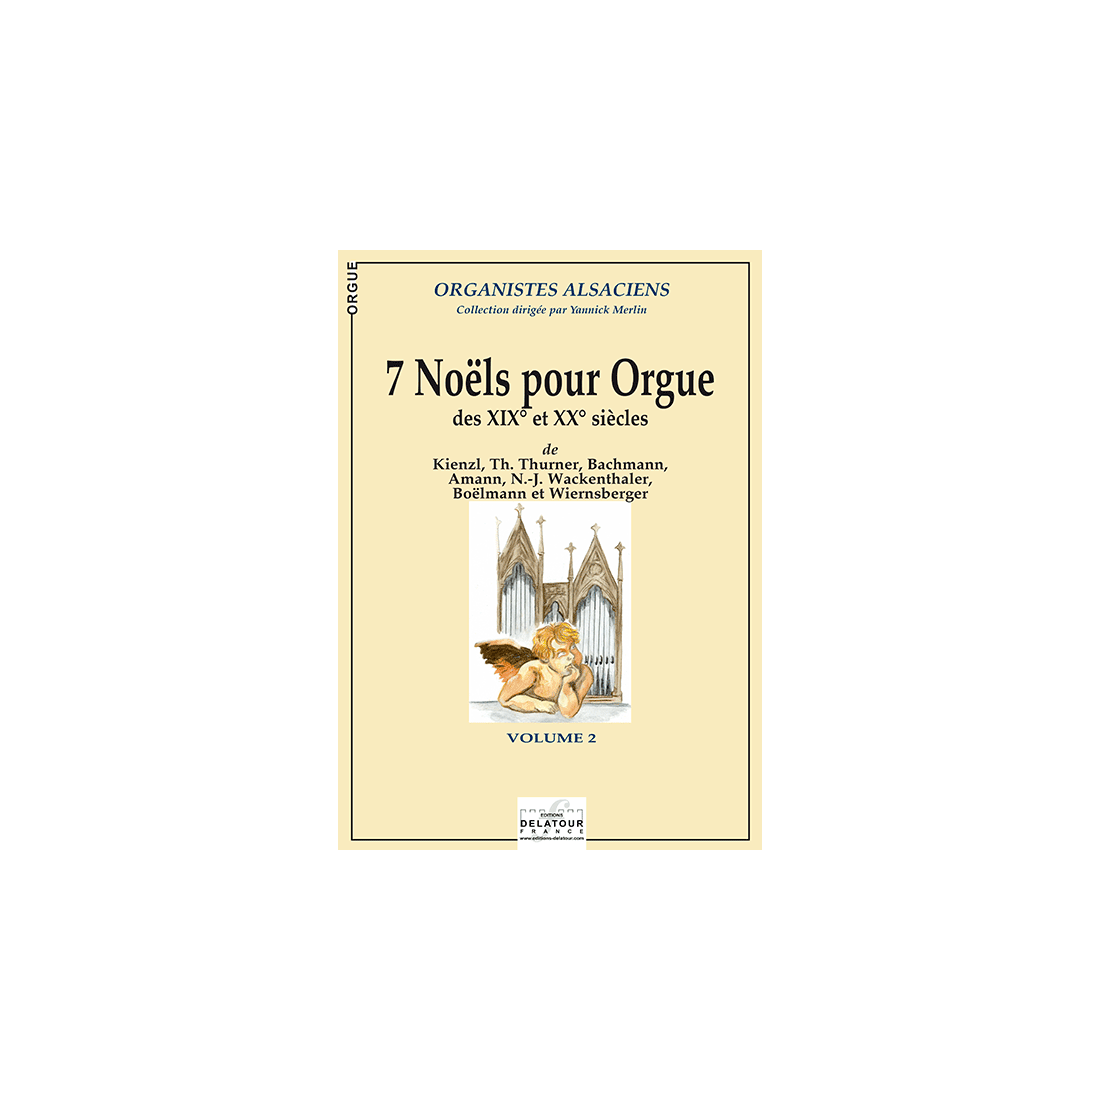 7 Noëls for organ of the XIX and XX centuries